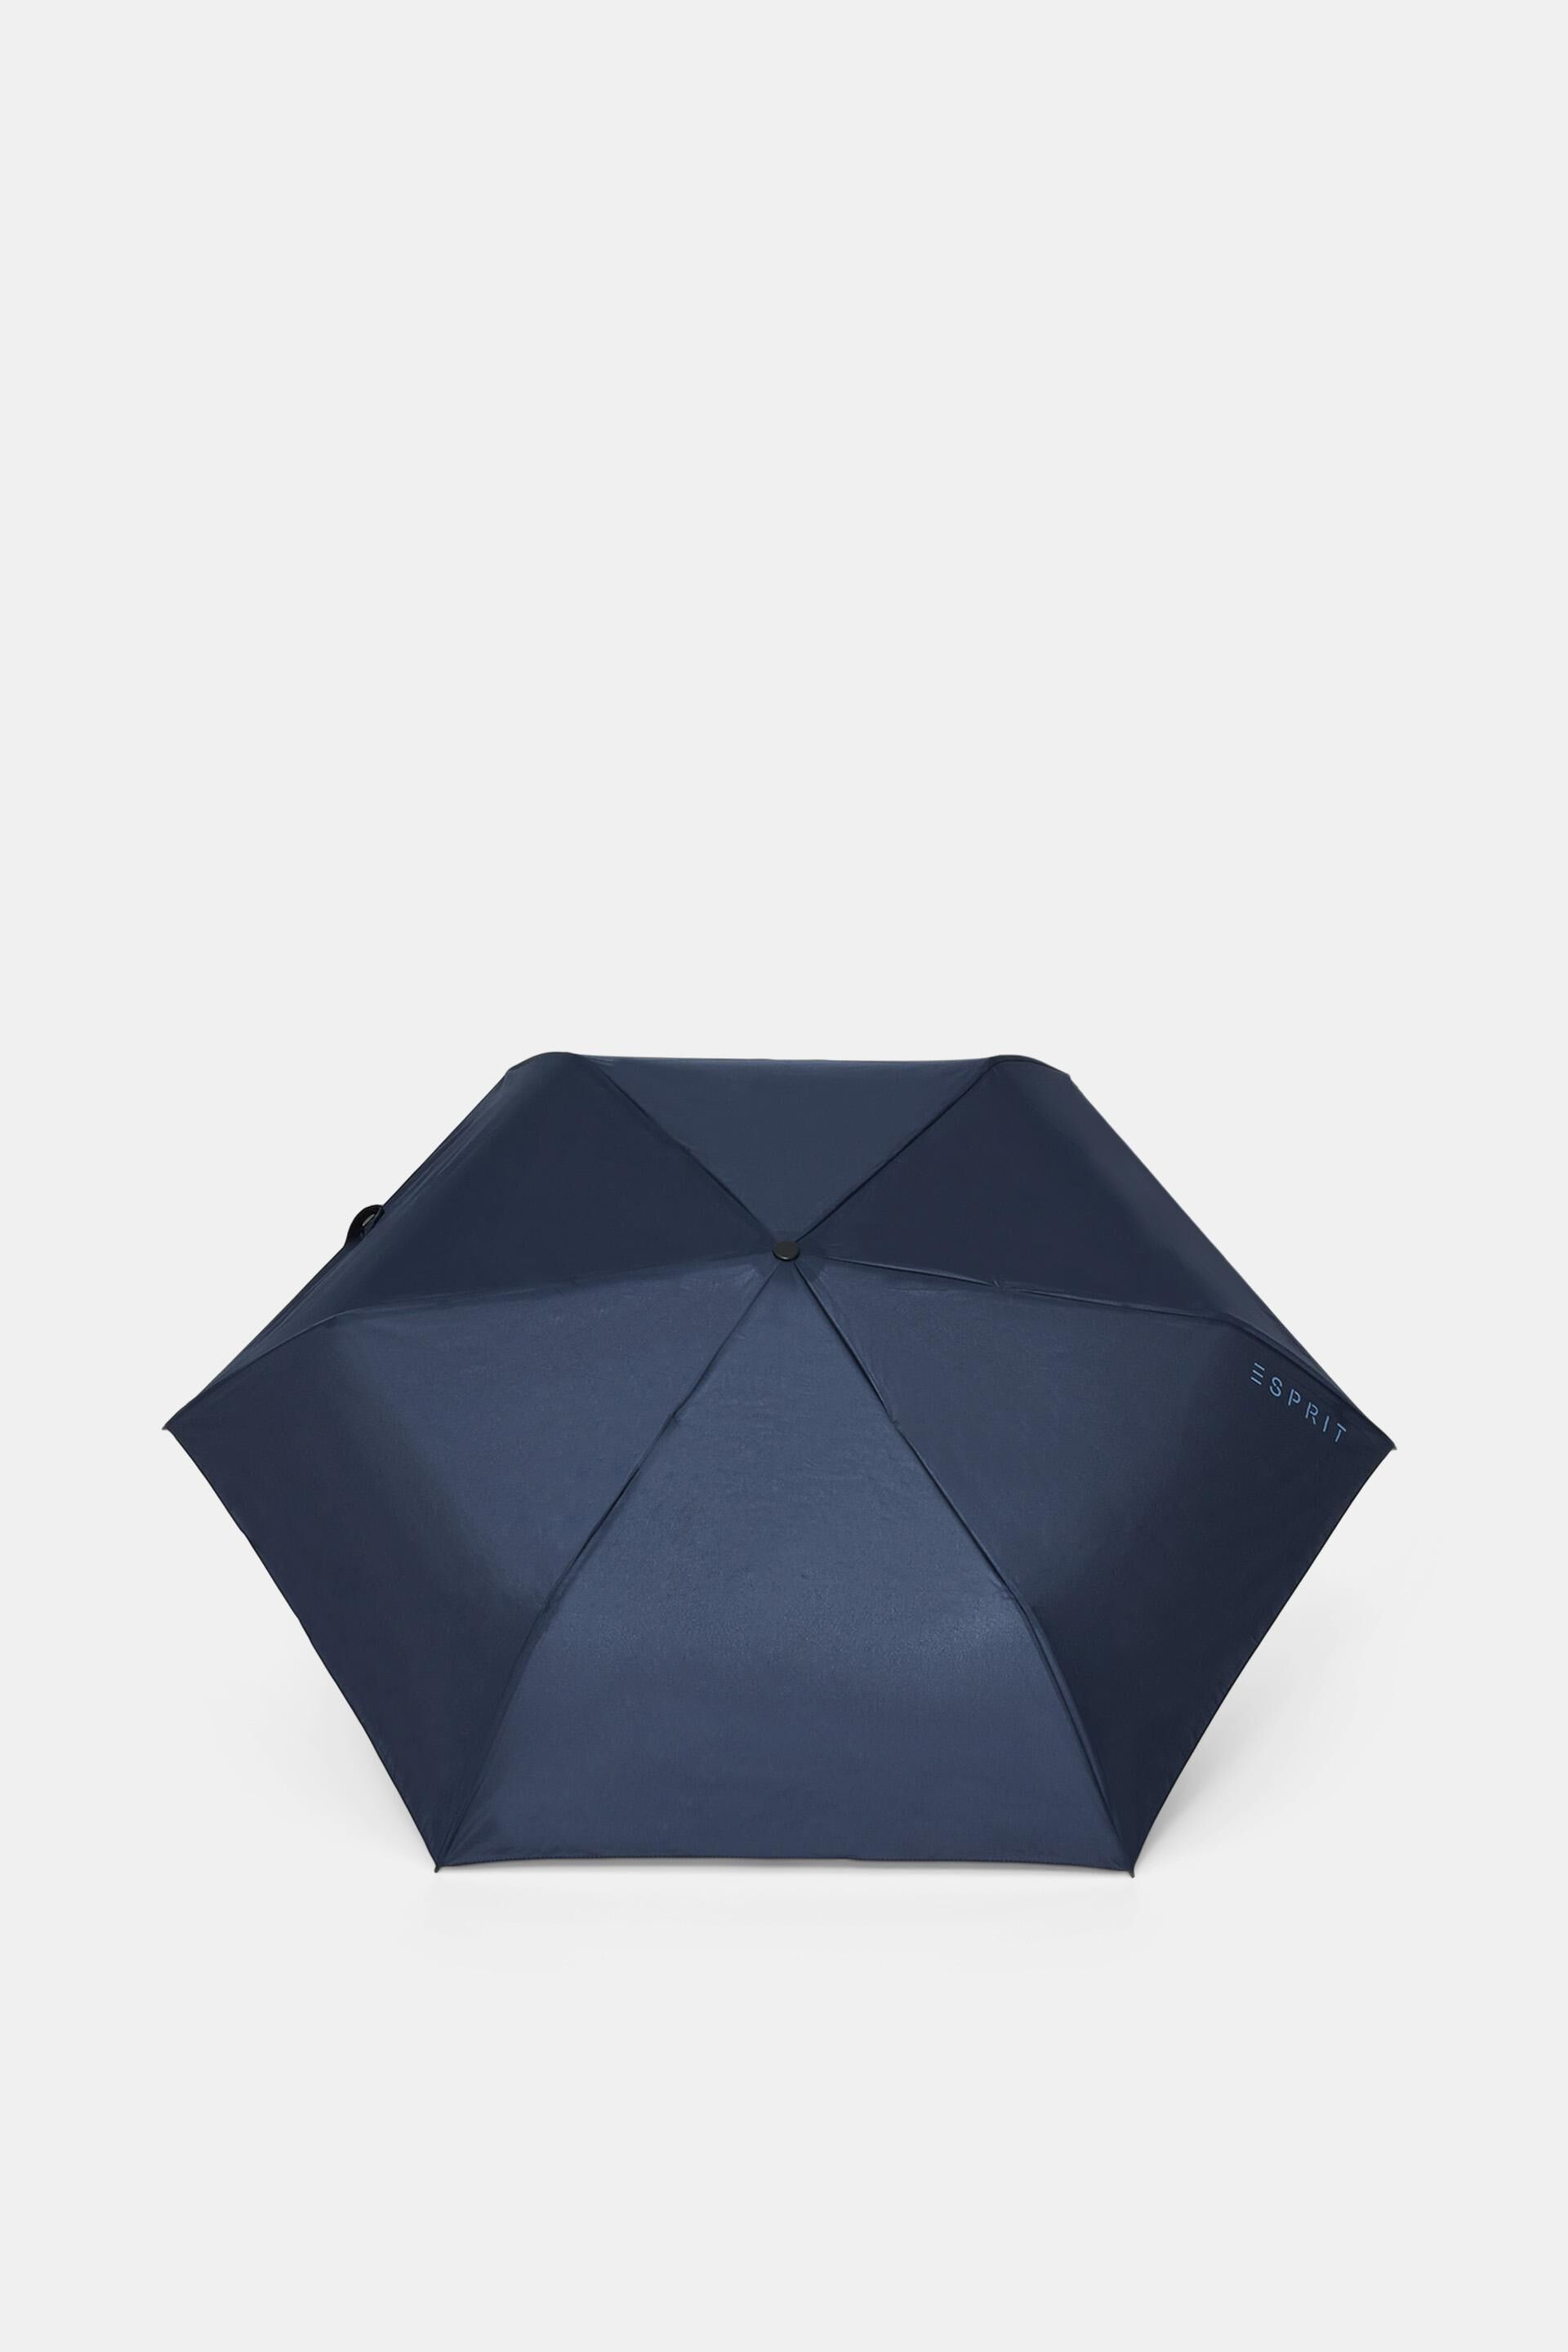 Esprit Online Store Easymatic slimline pocket blue umbrella in